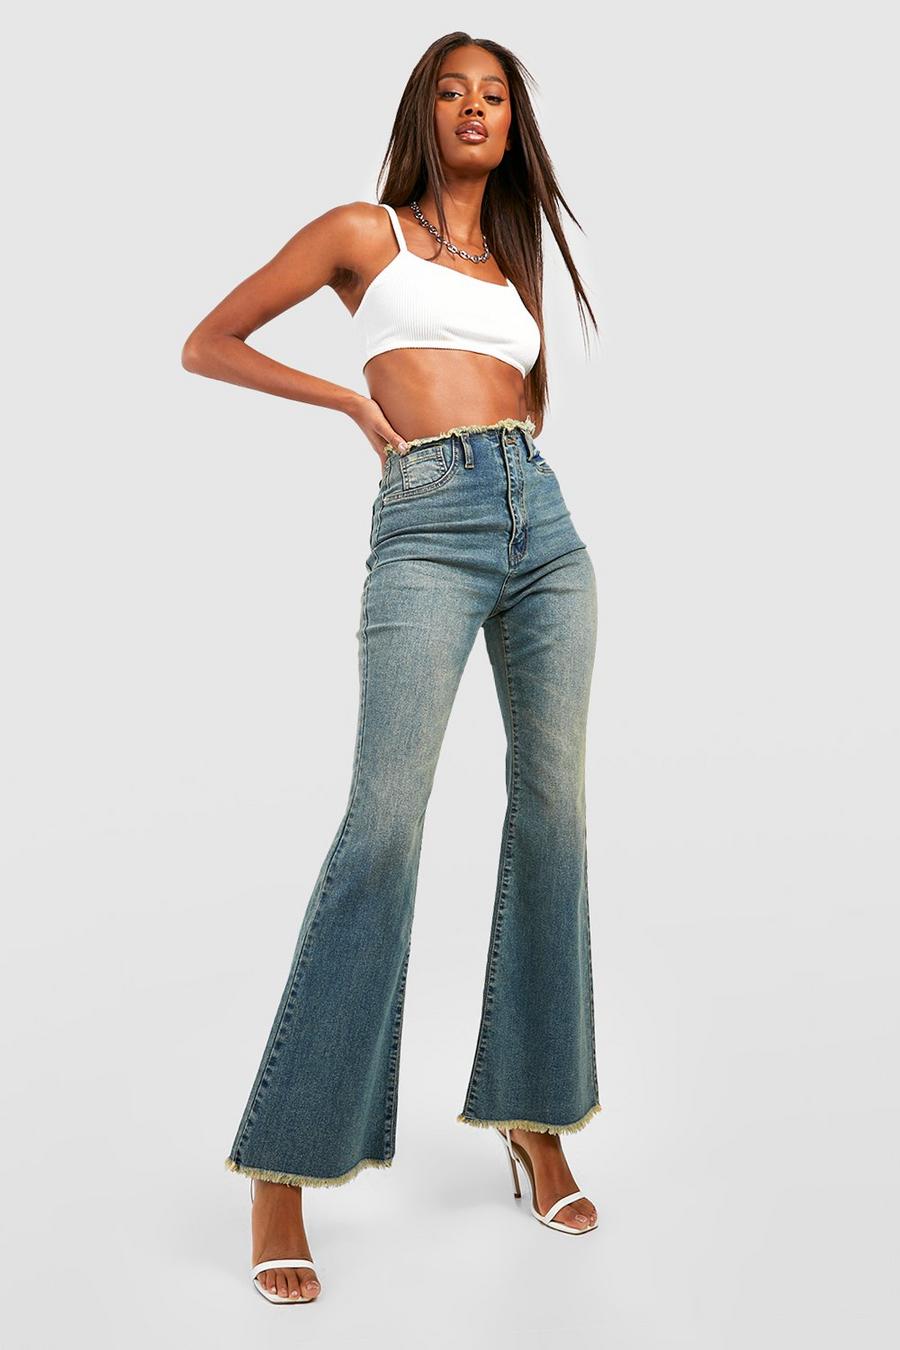 Bell Bottom Jeans, Women's Flare Jeans